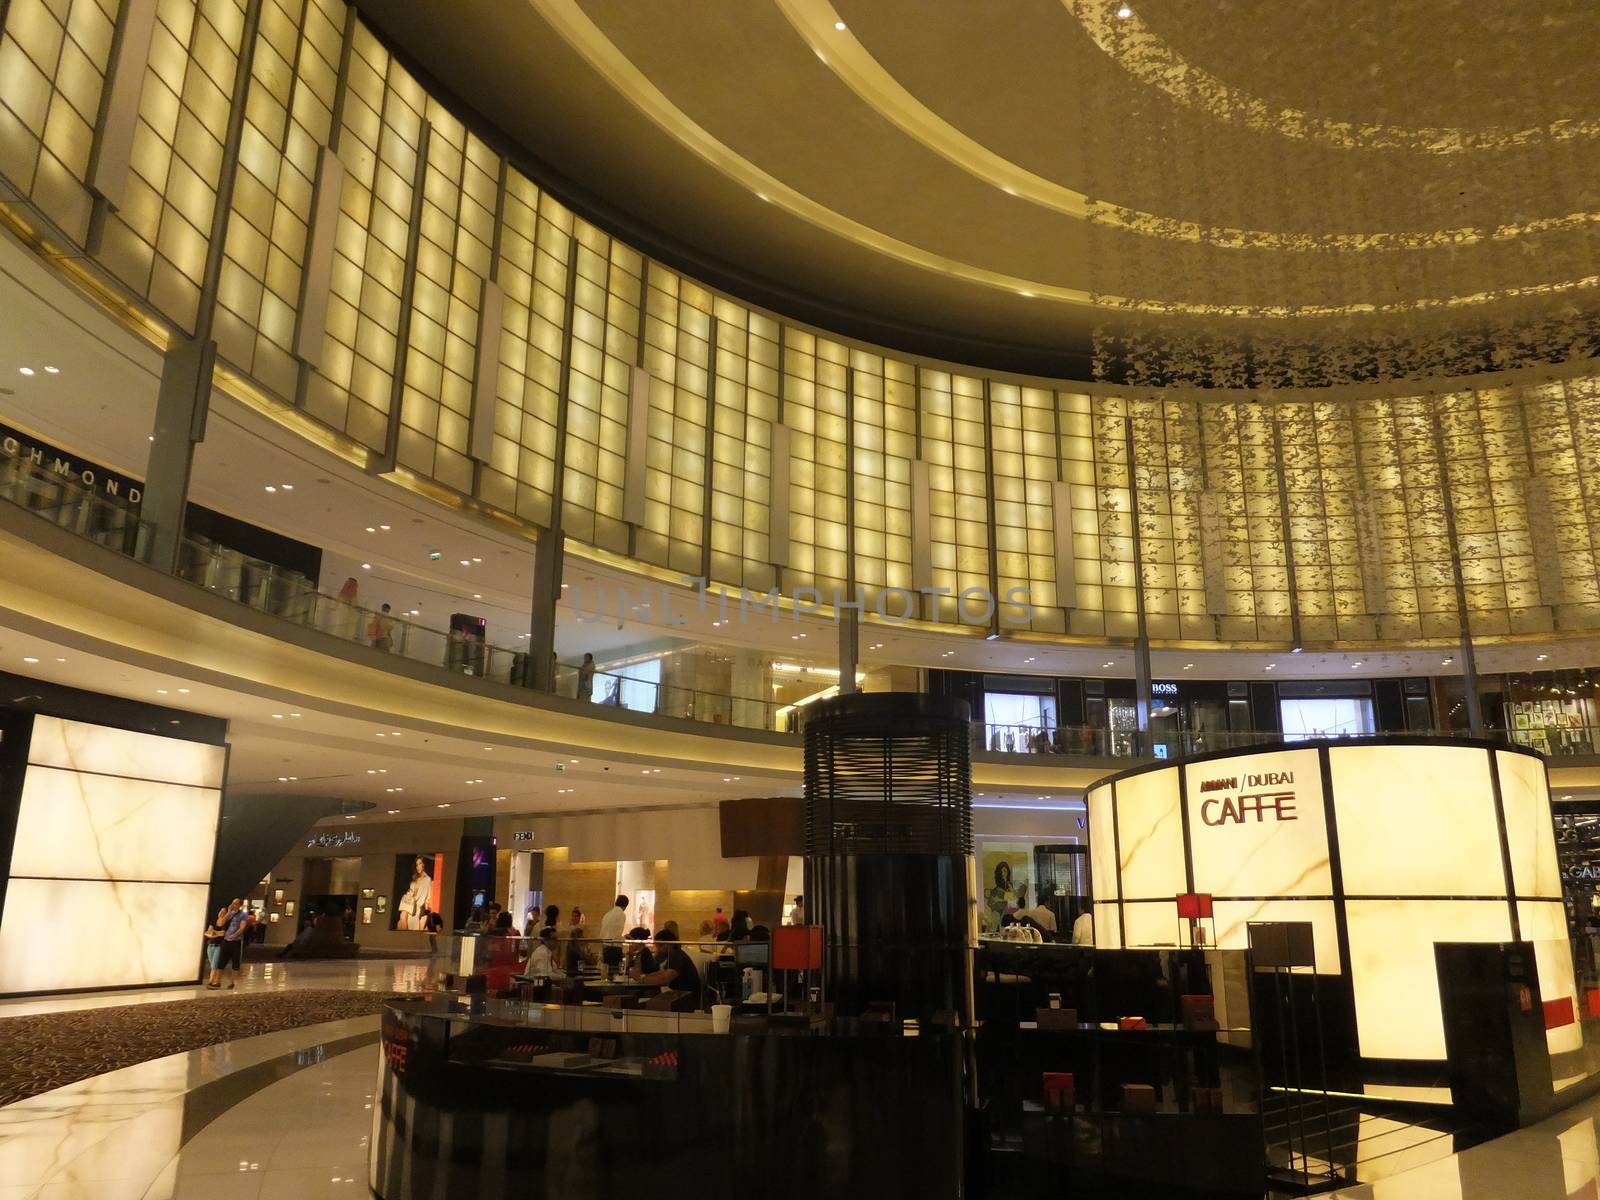 The 440,000 sq ft Fashion Avenue at Dubai Mall in Dubai, UAE by sainaniritu